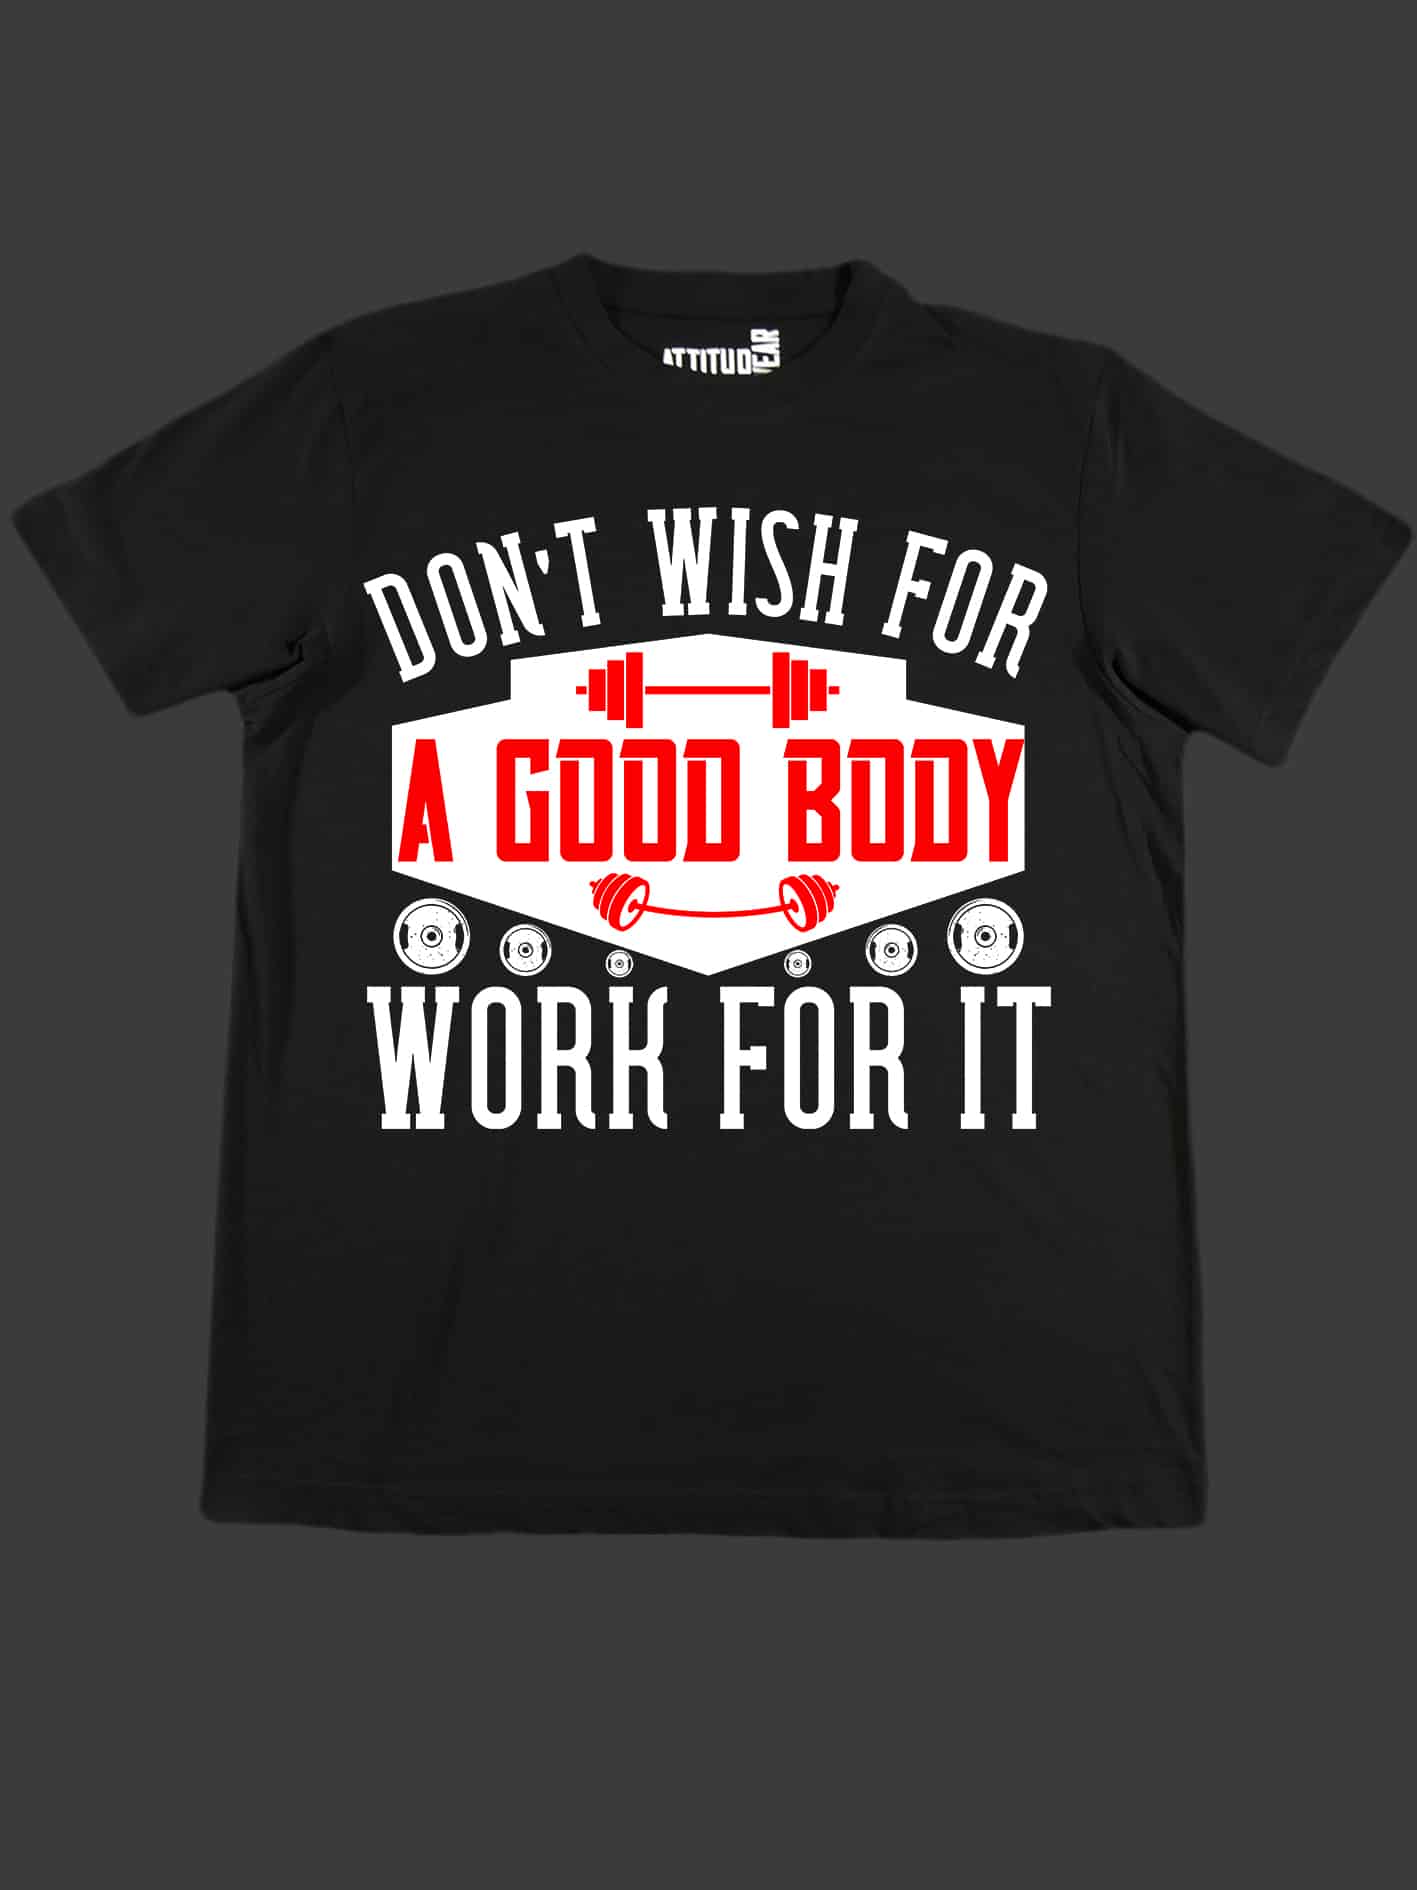 good body fitness t-shirt